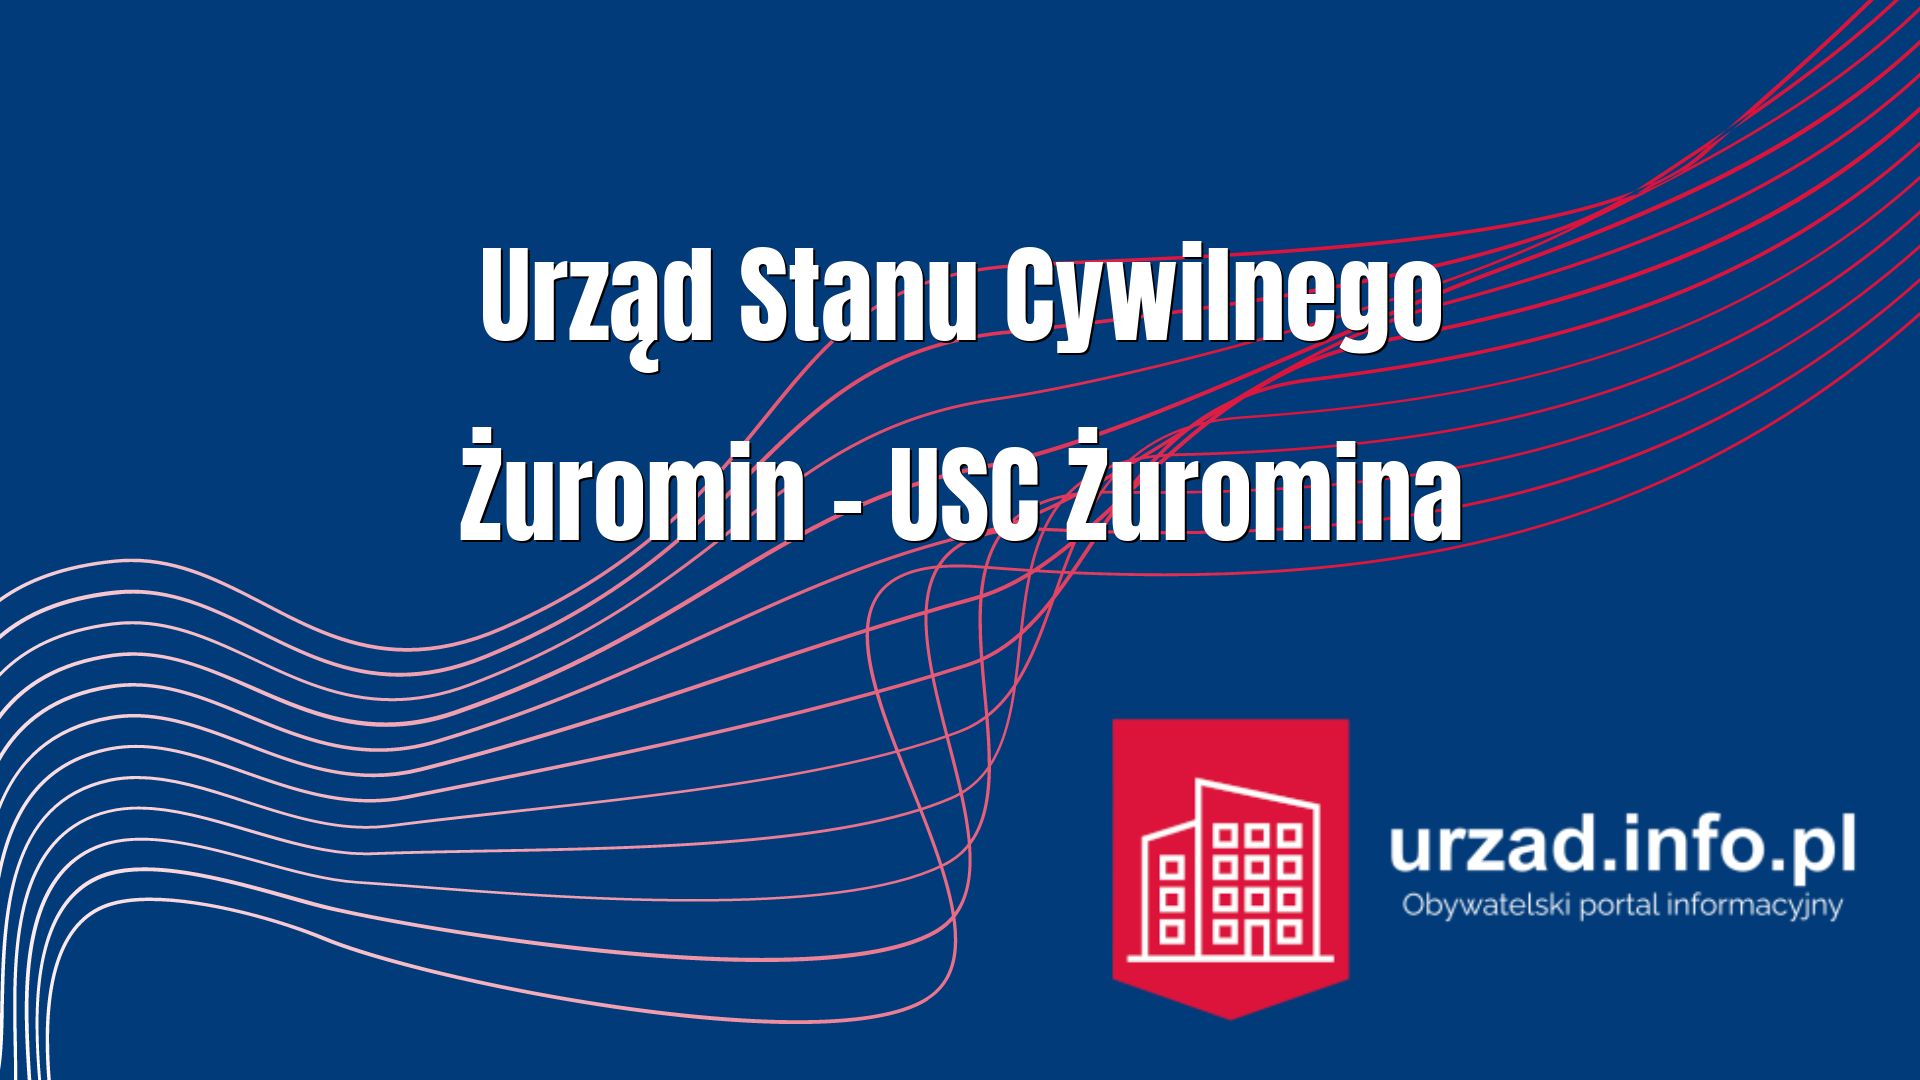 Urząd Stanu Cywilnego Żuromin – USC Żuromina